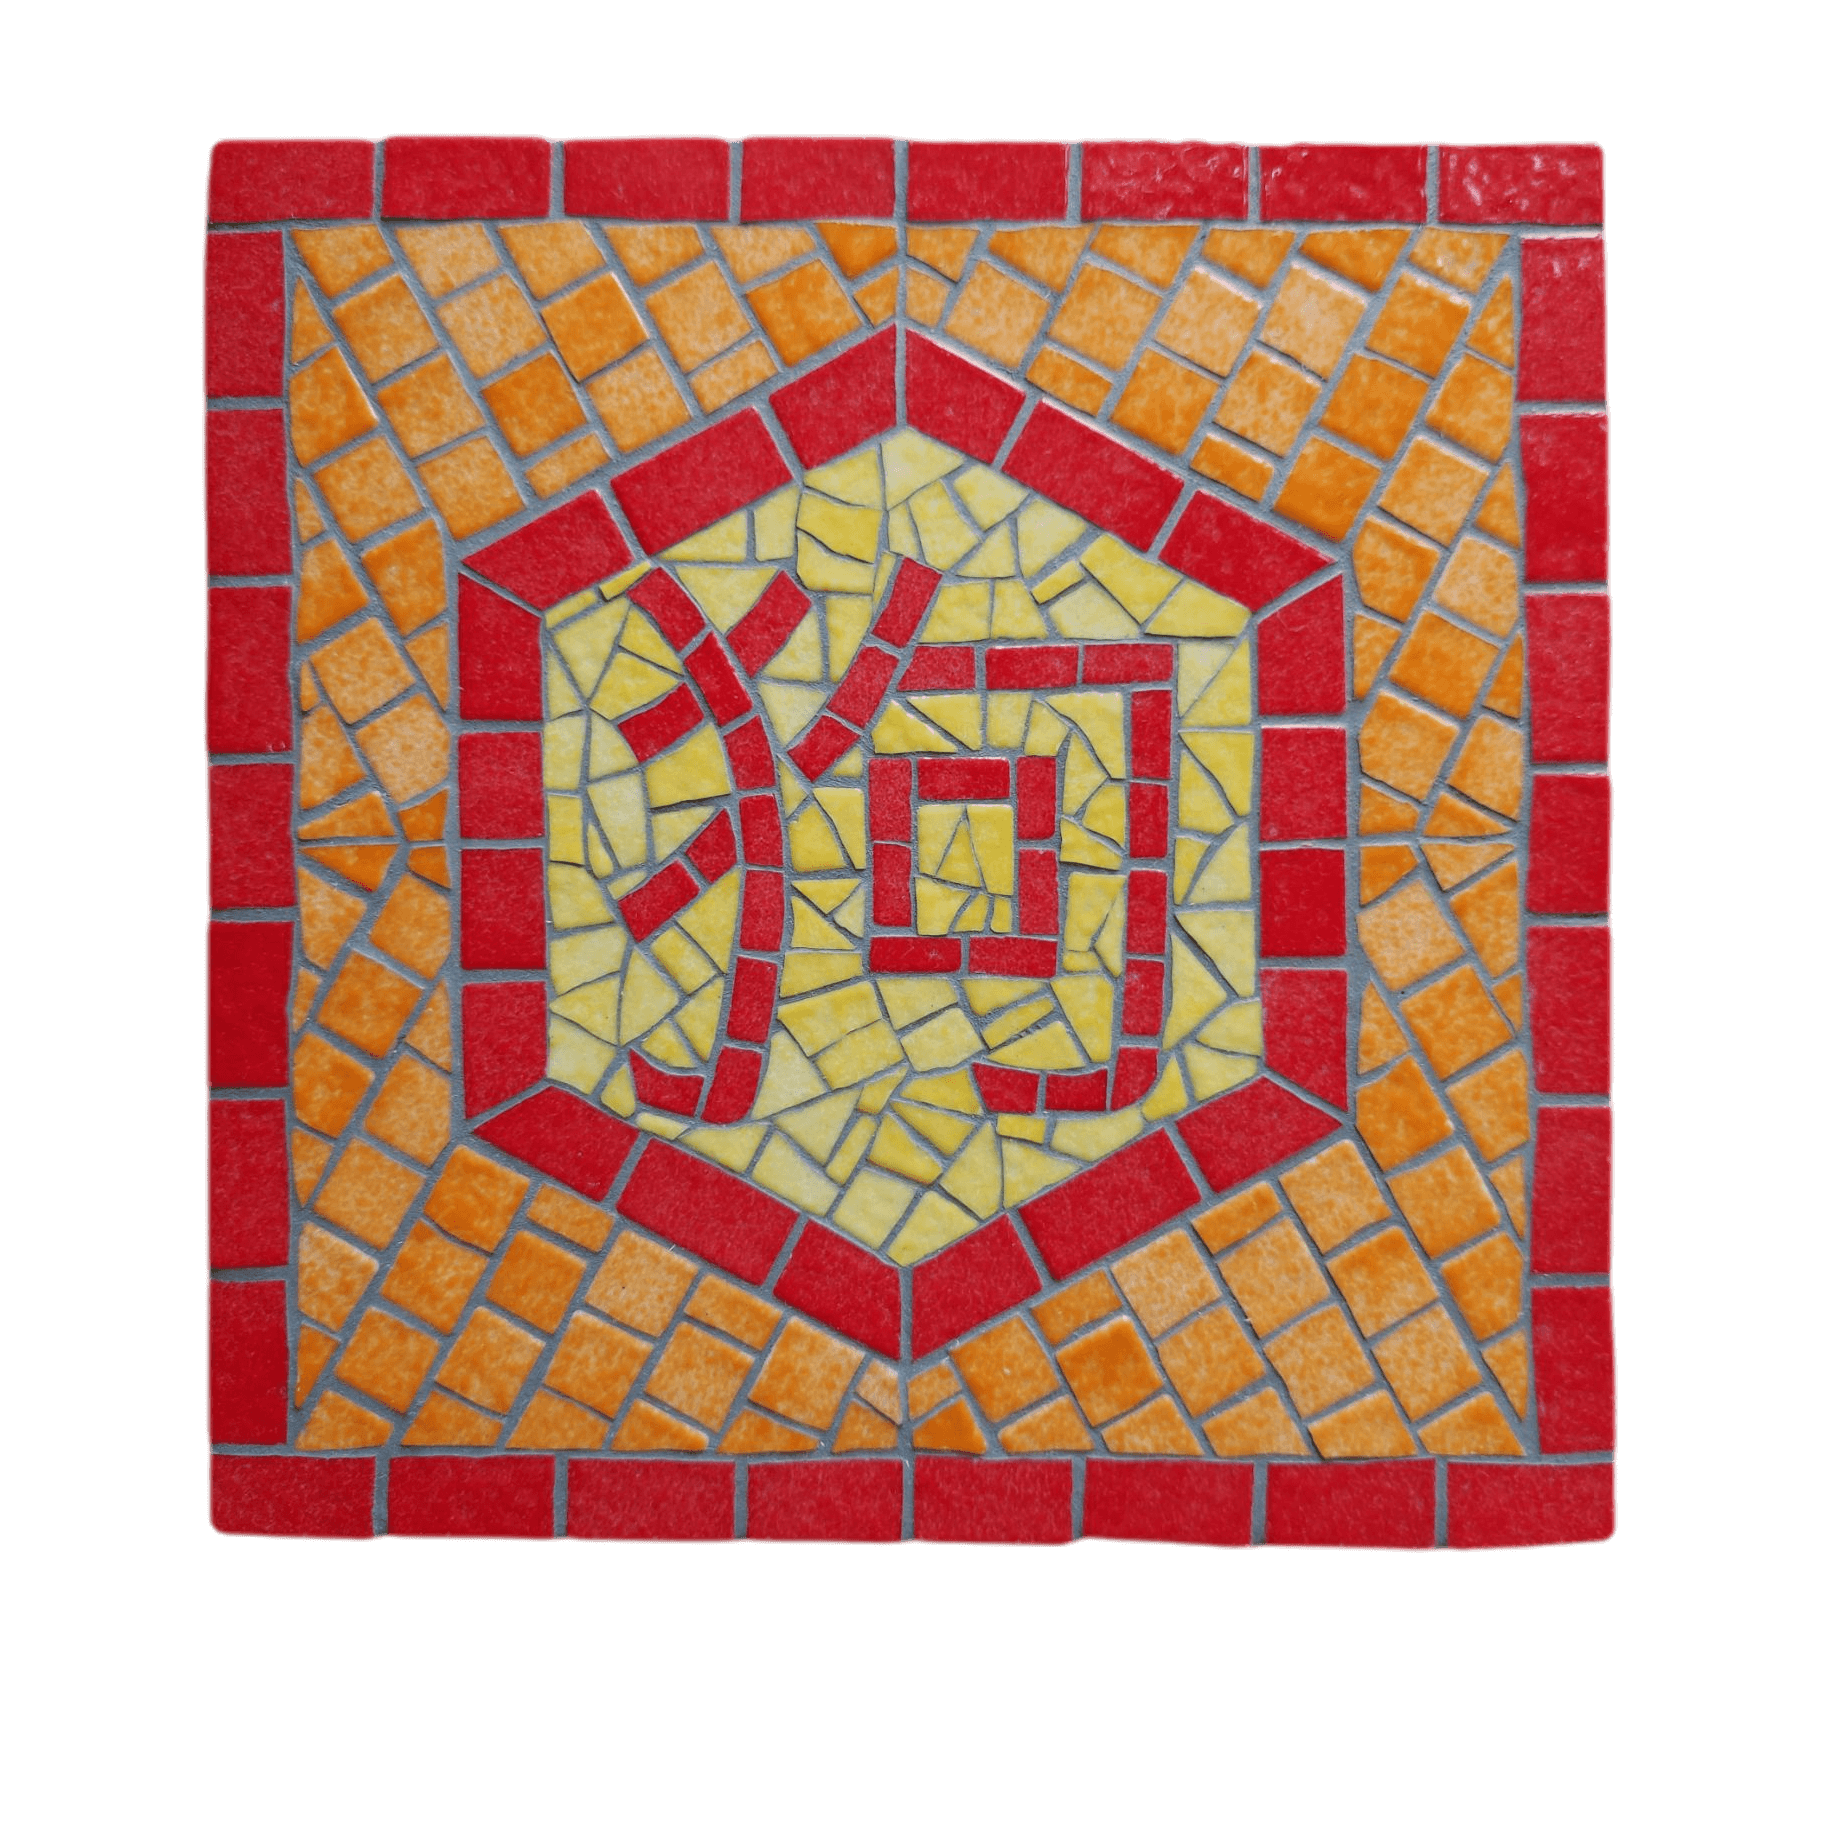 Artisanal Chinese zodiac mosaic, Dog sign, red line